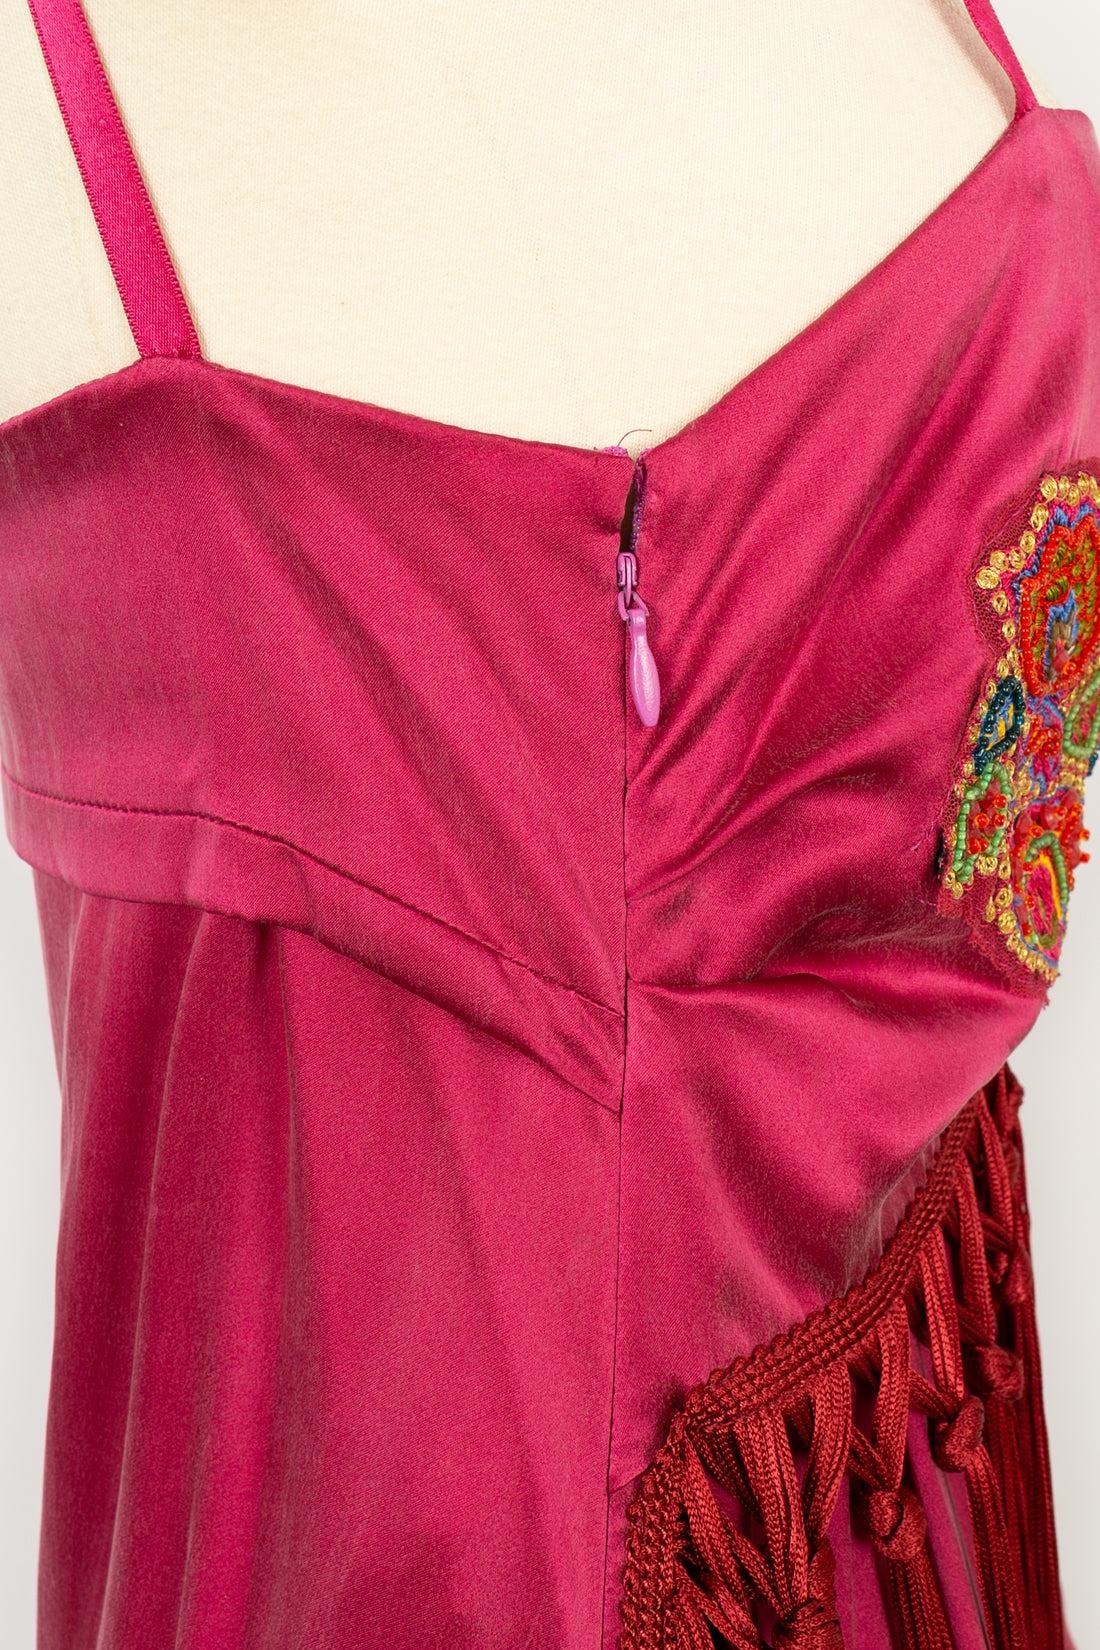 John Galliano Dress in Pink Silk, 2000s For Sale 3